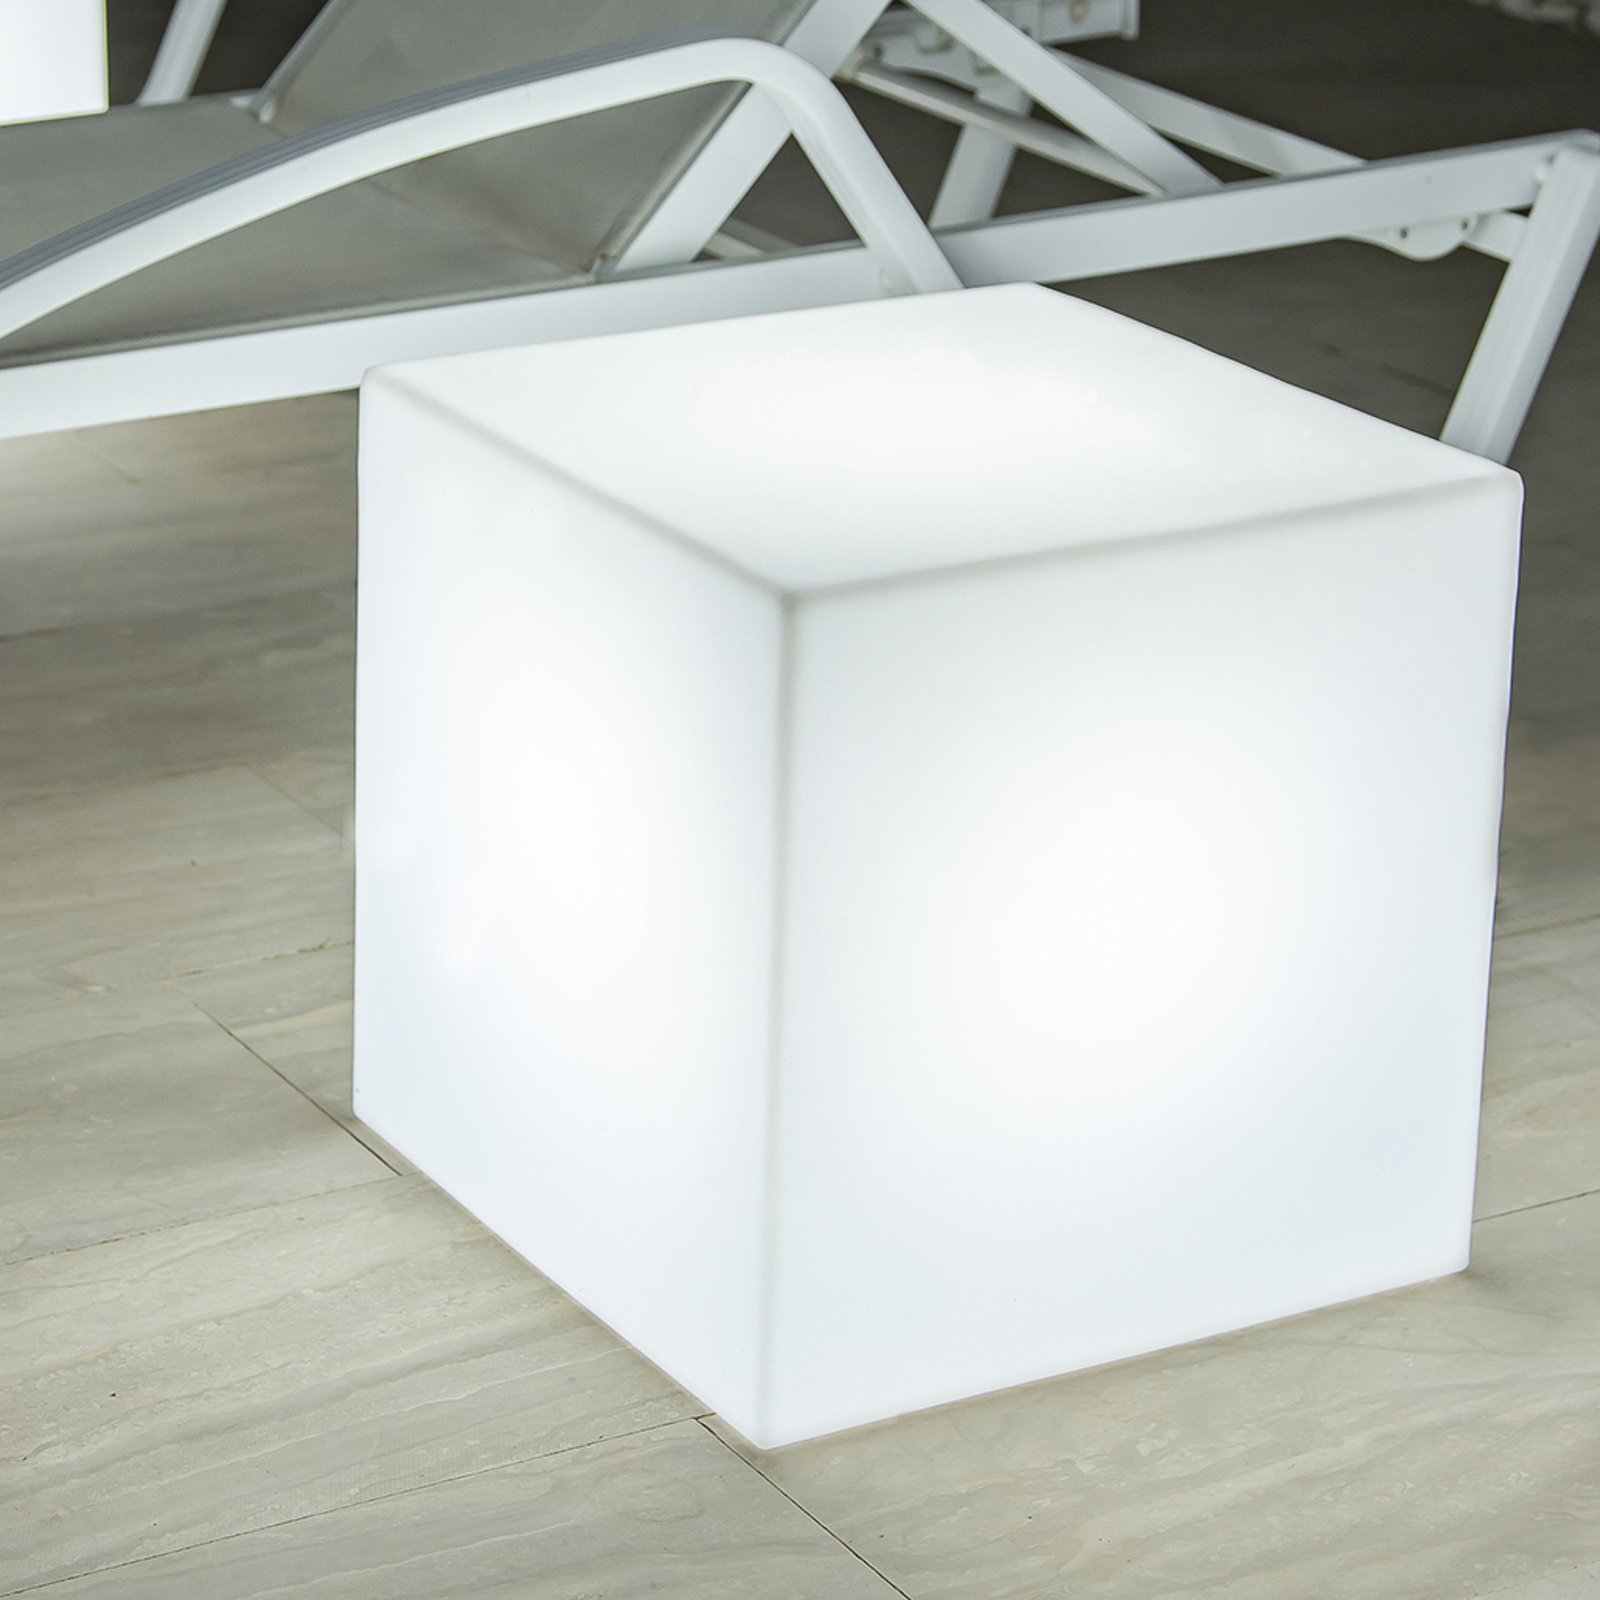 Newgarden Cuby LED sfeerlamp met snoer, 40x40cm